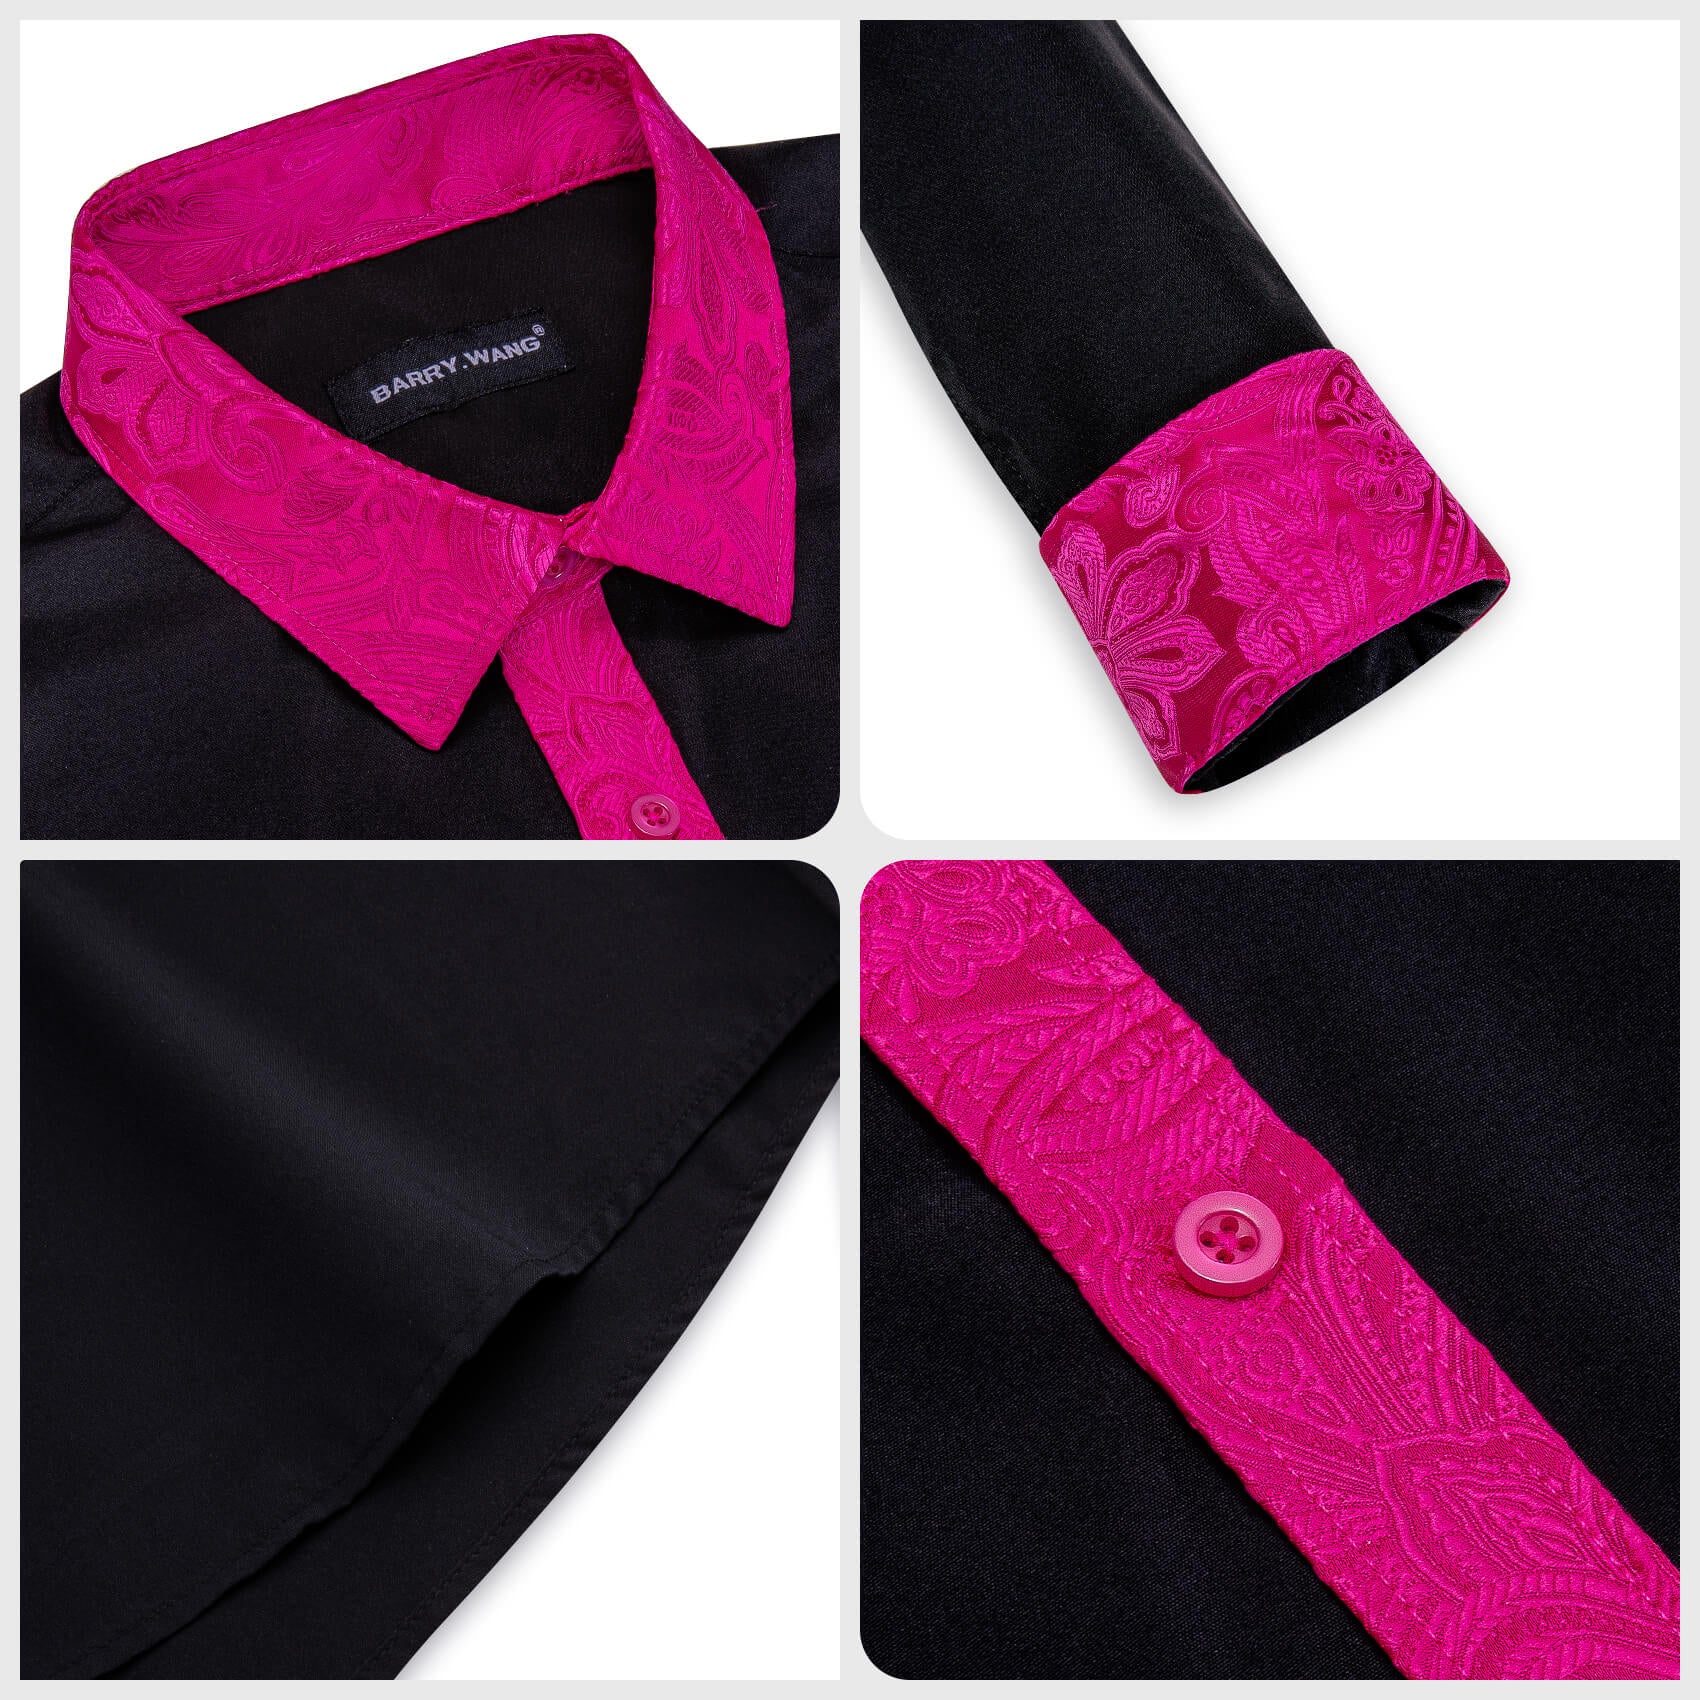 Barry.wang Buttoned Down Shirt Black Rose Pink Paisley Splicing Men's Long Sleeve Shirt